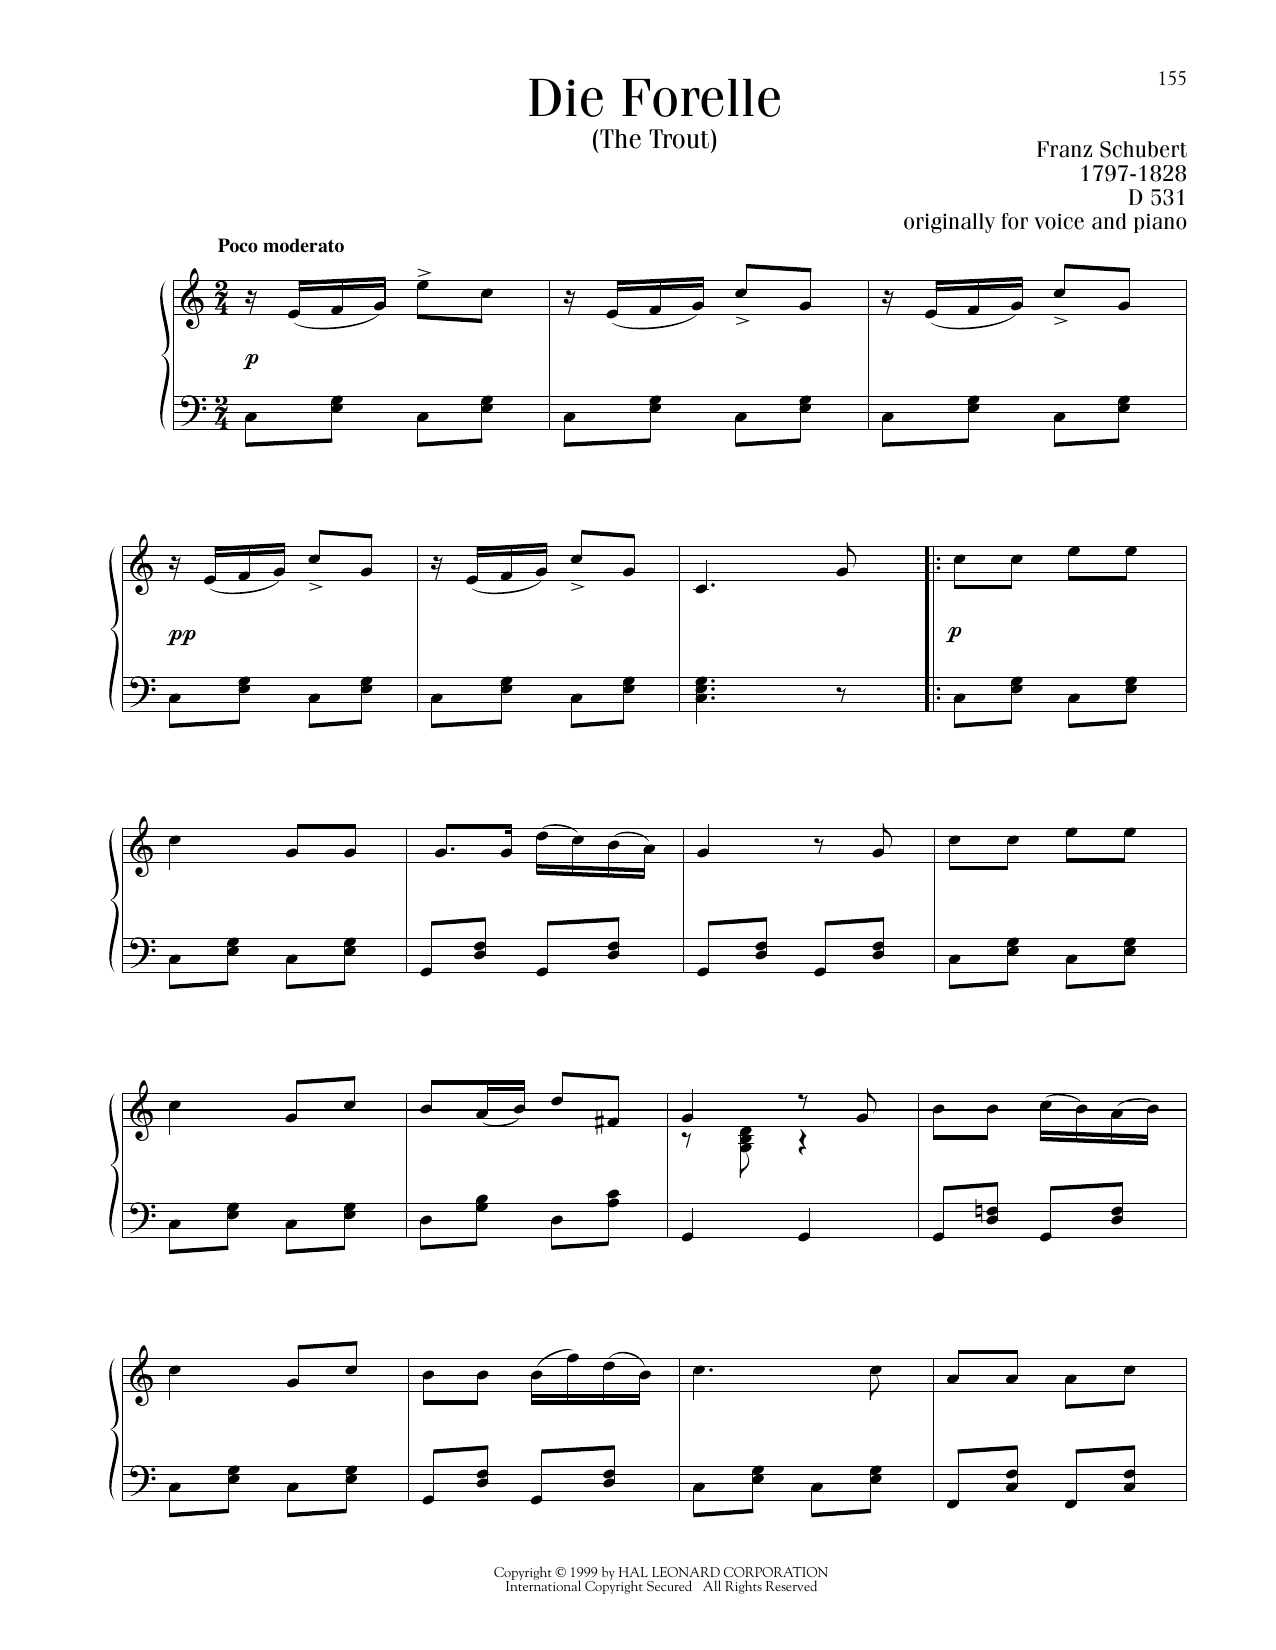 Franz Schubert Die Forelle sheet music notes printable PDF score